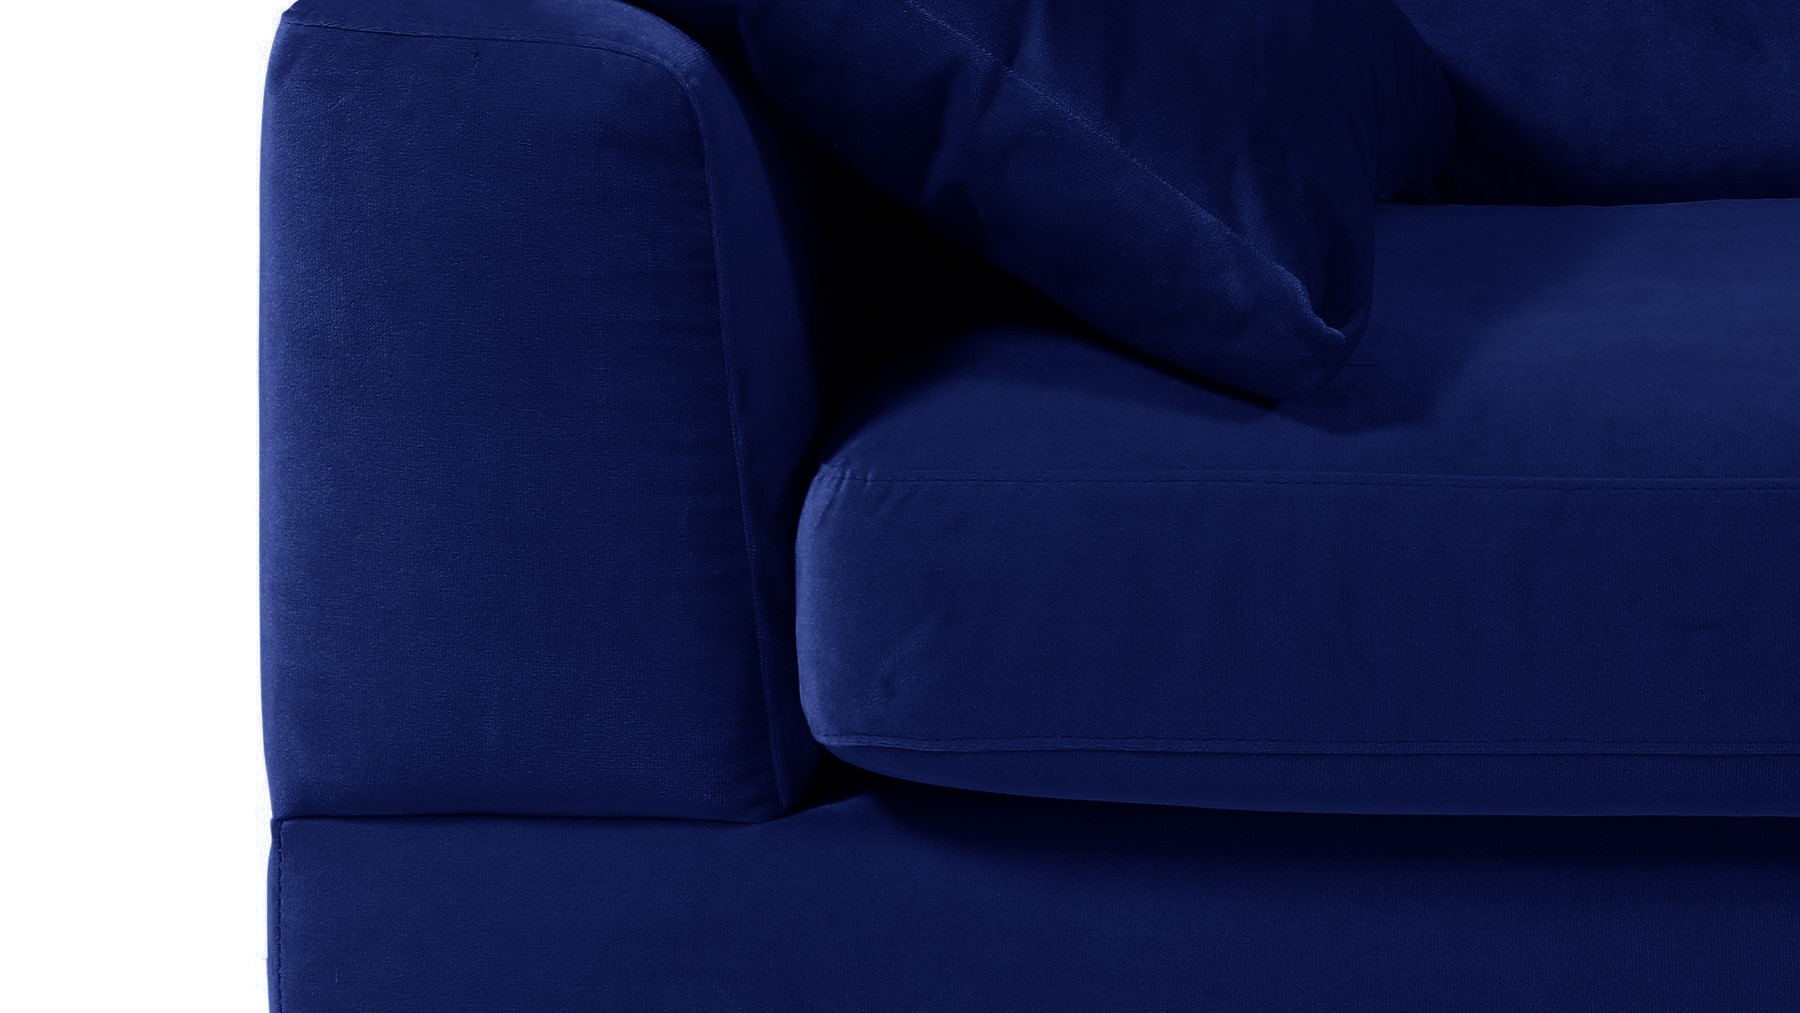 amur-sofa-blue-detail-armrest-1